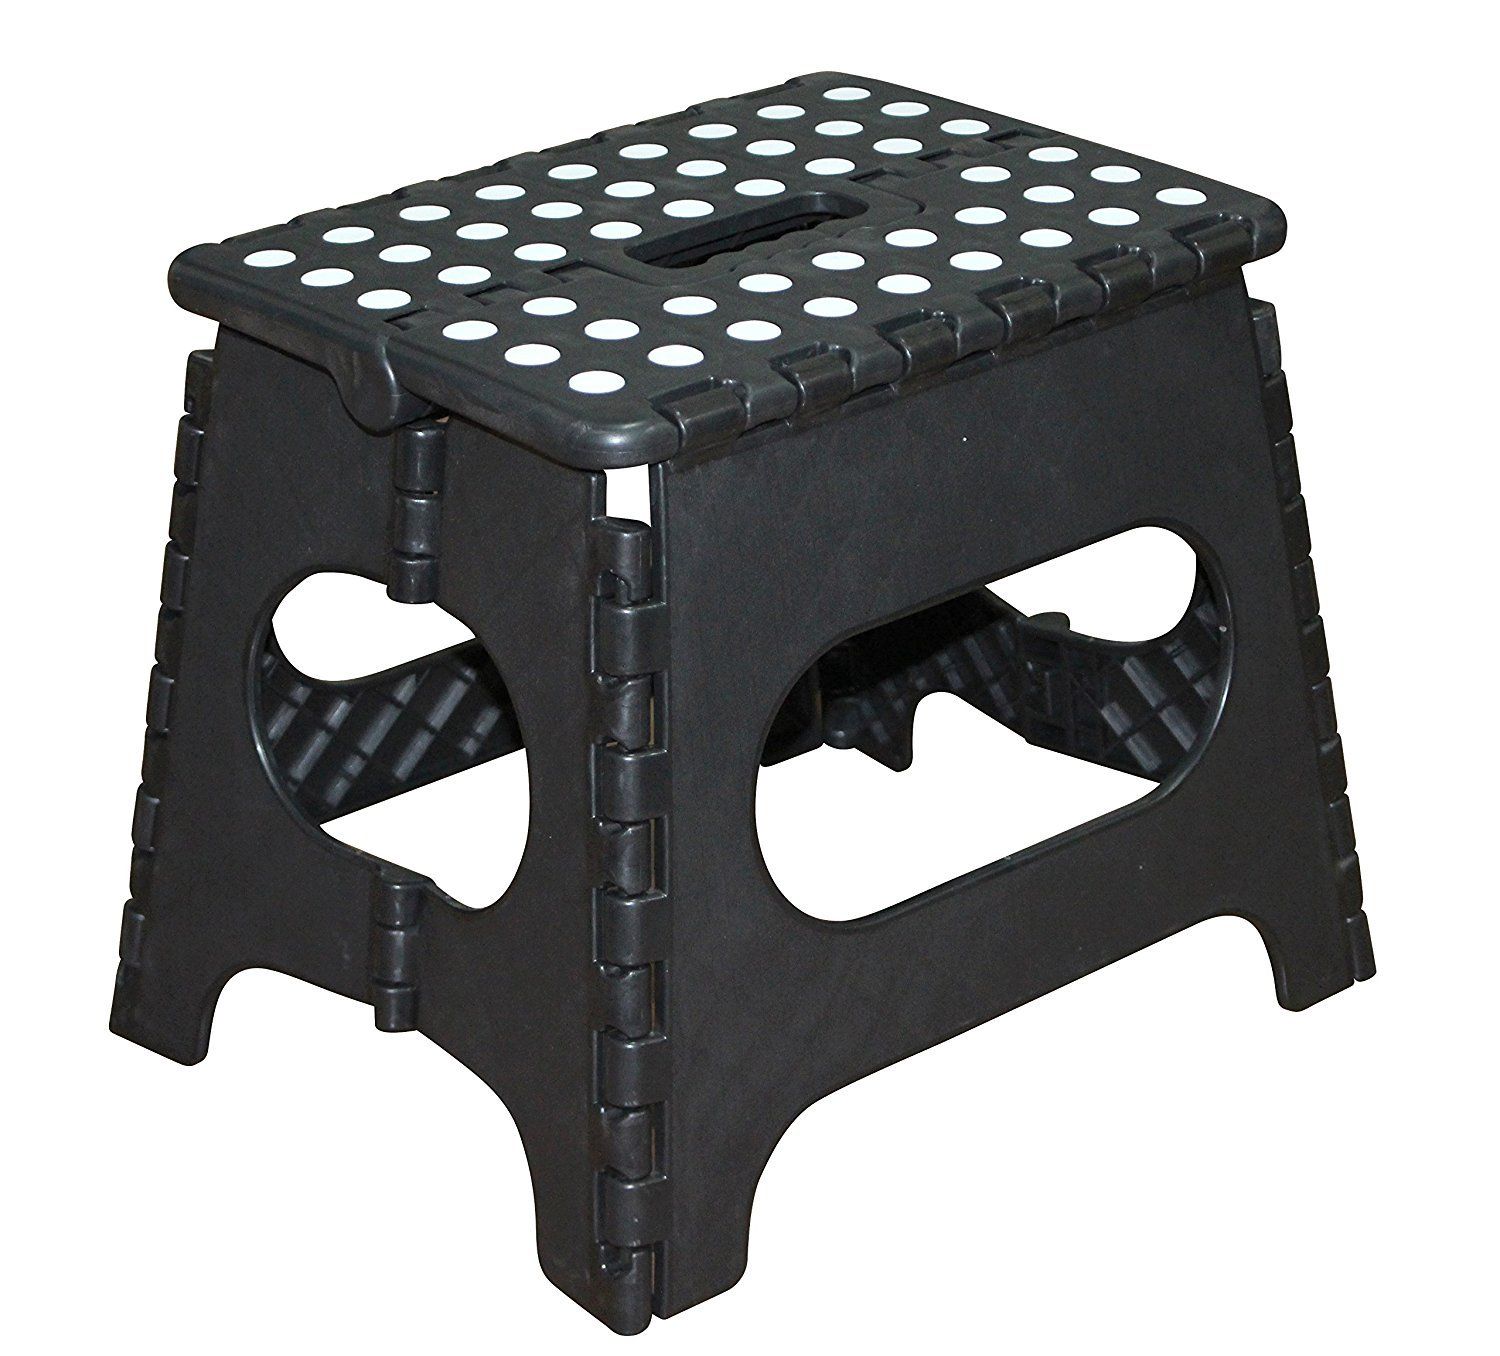 Folding Plastic Step Ladder Stool - Black HomeFX Folding Plastic Step Stool